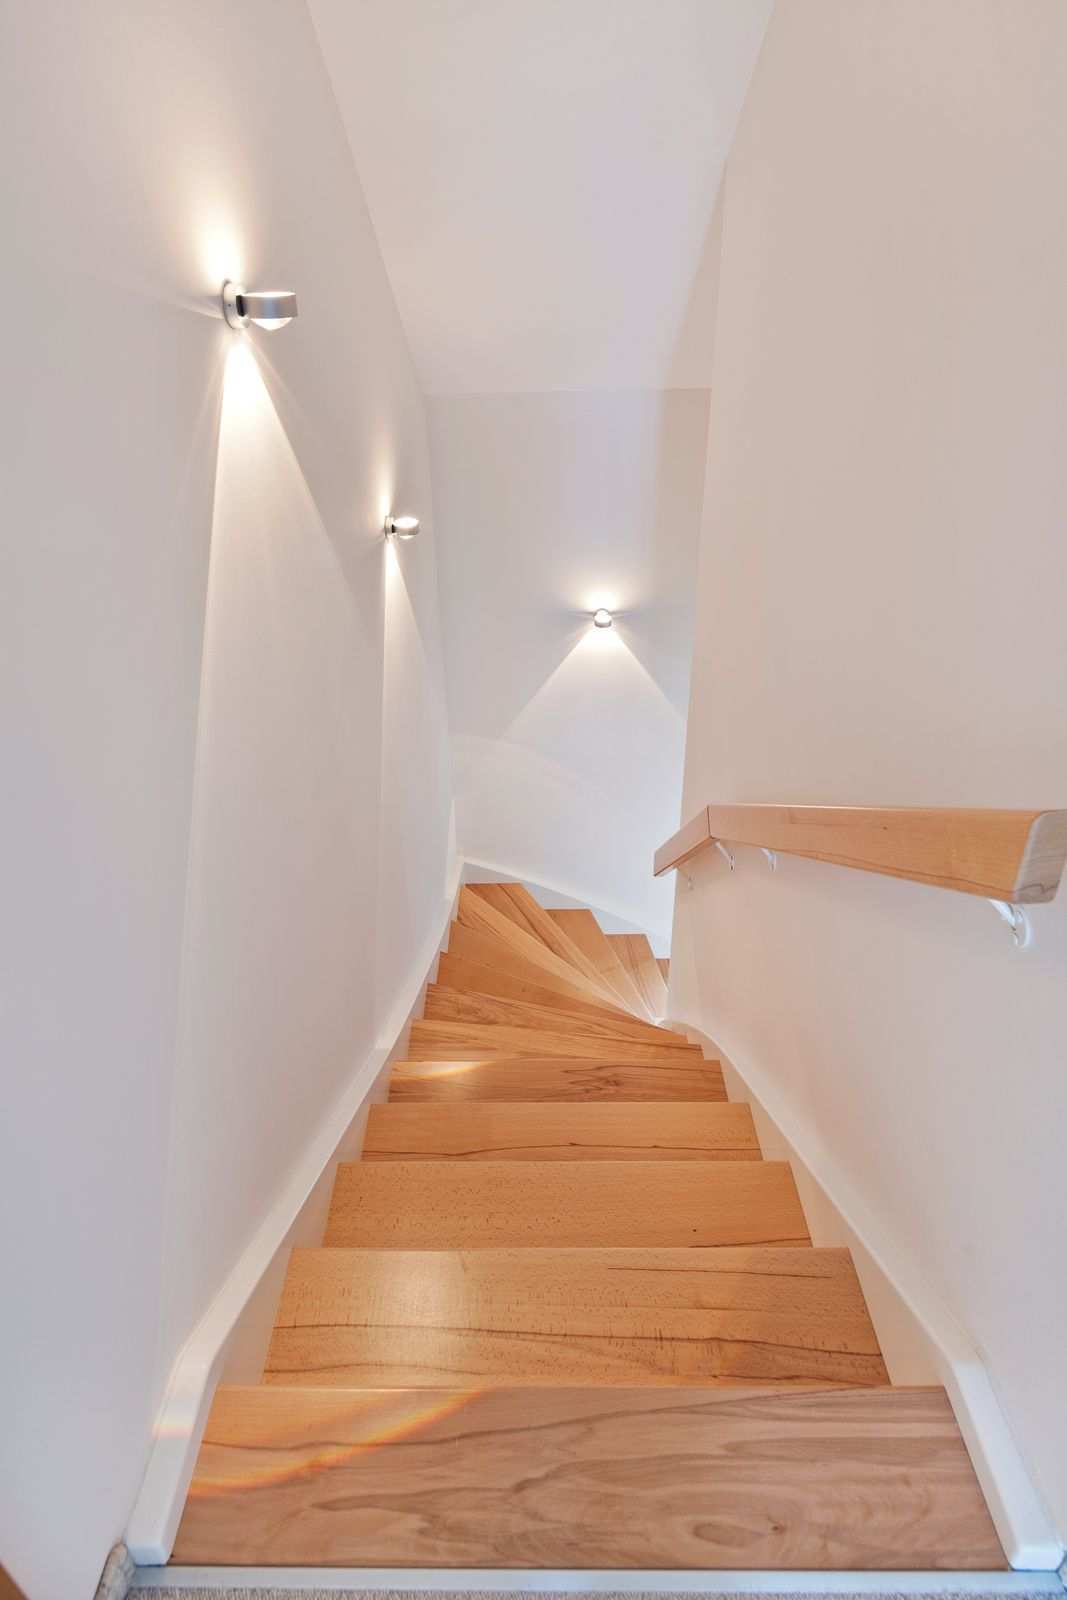 Holztreppe Mit Beleuchtung Inspiration Treppenhaus Beleuchtung Treppenbeleuchtung Treppen Design